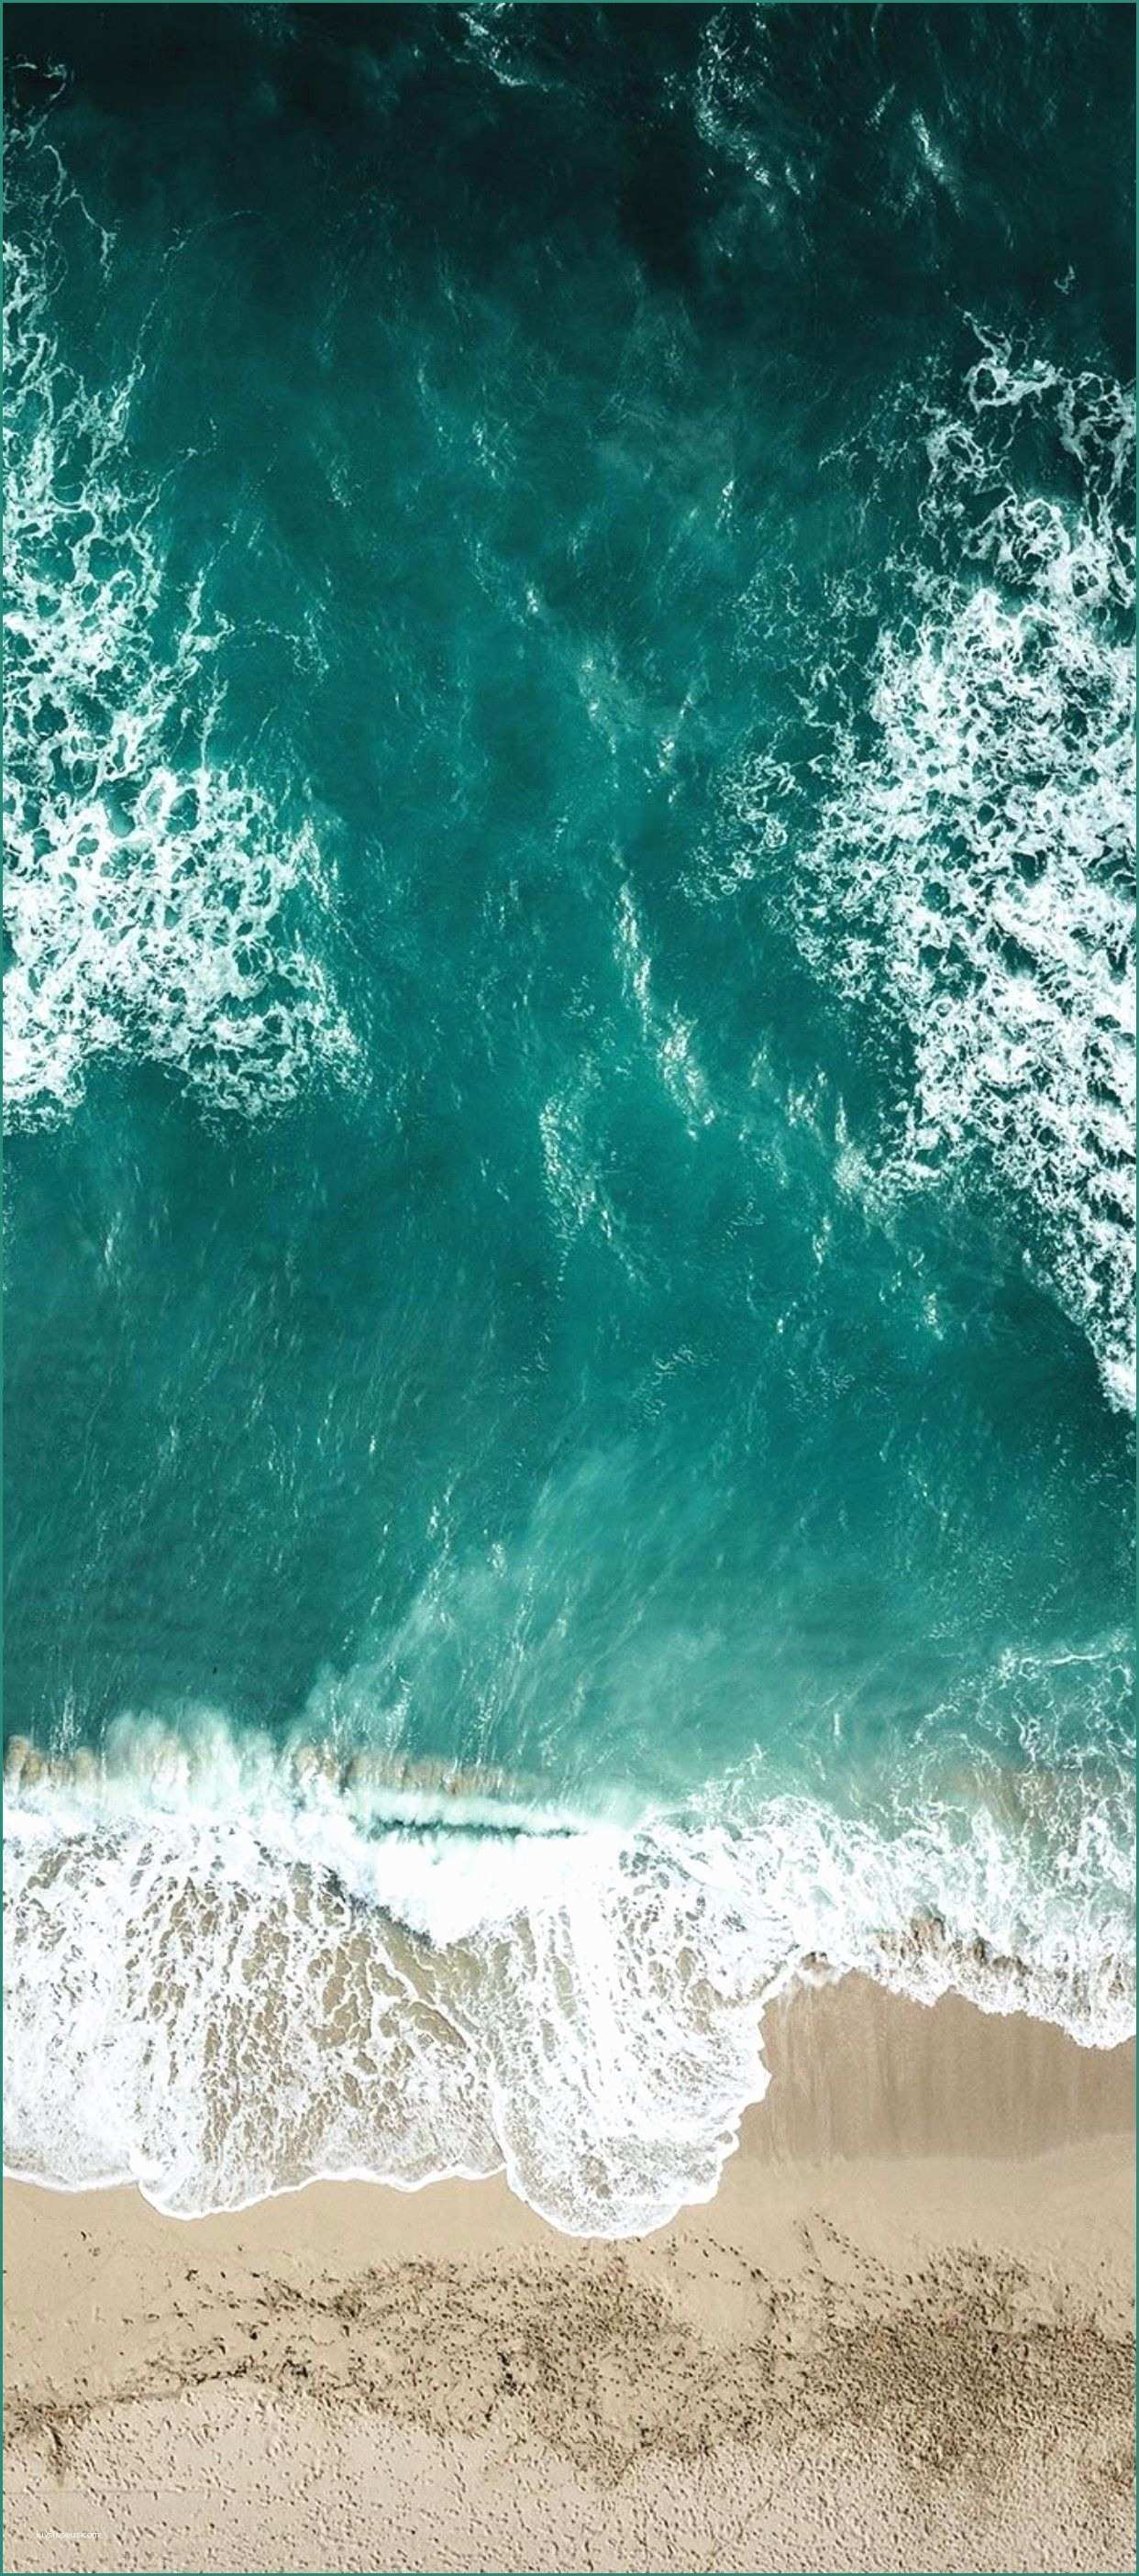 Immagini Paesaggi Naturali Gratis E S8 Note Wallpaper Backgrounds Nature Tranquil Sea Beach